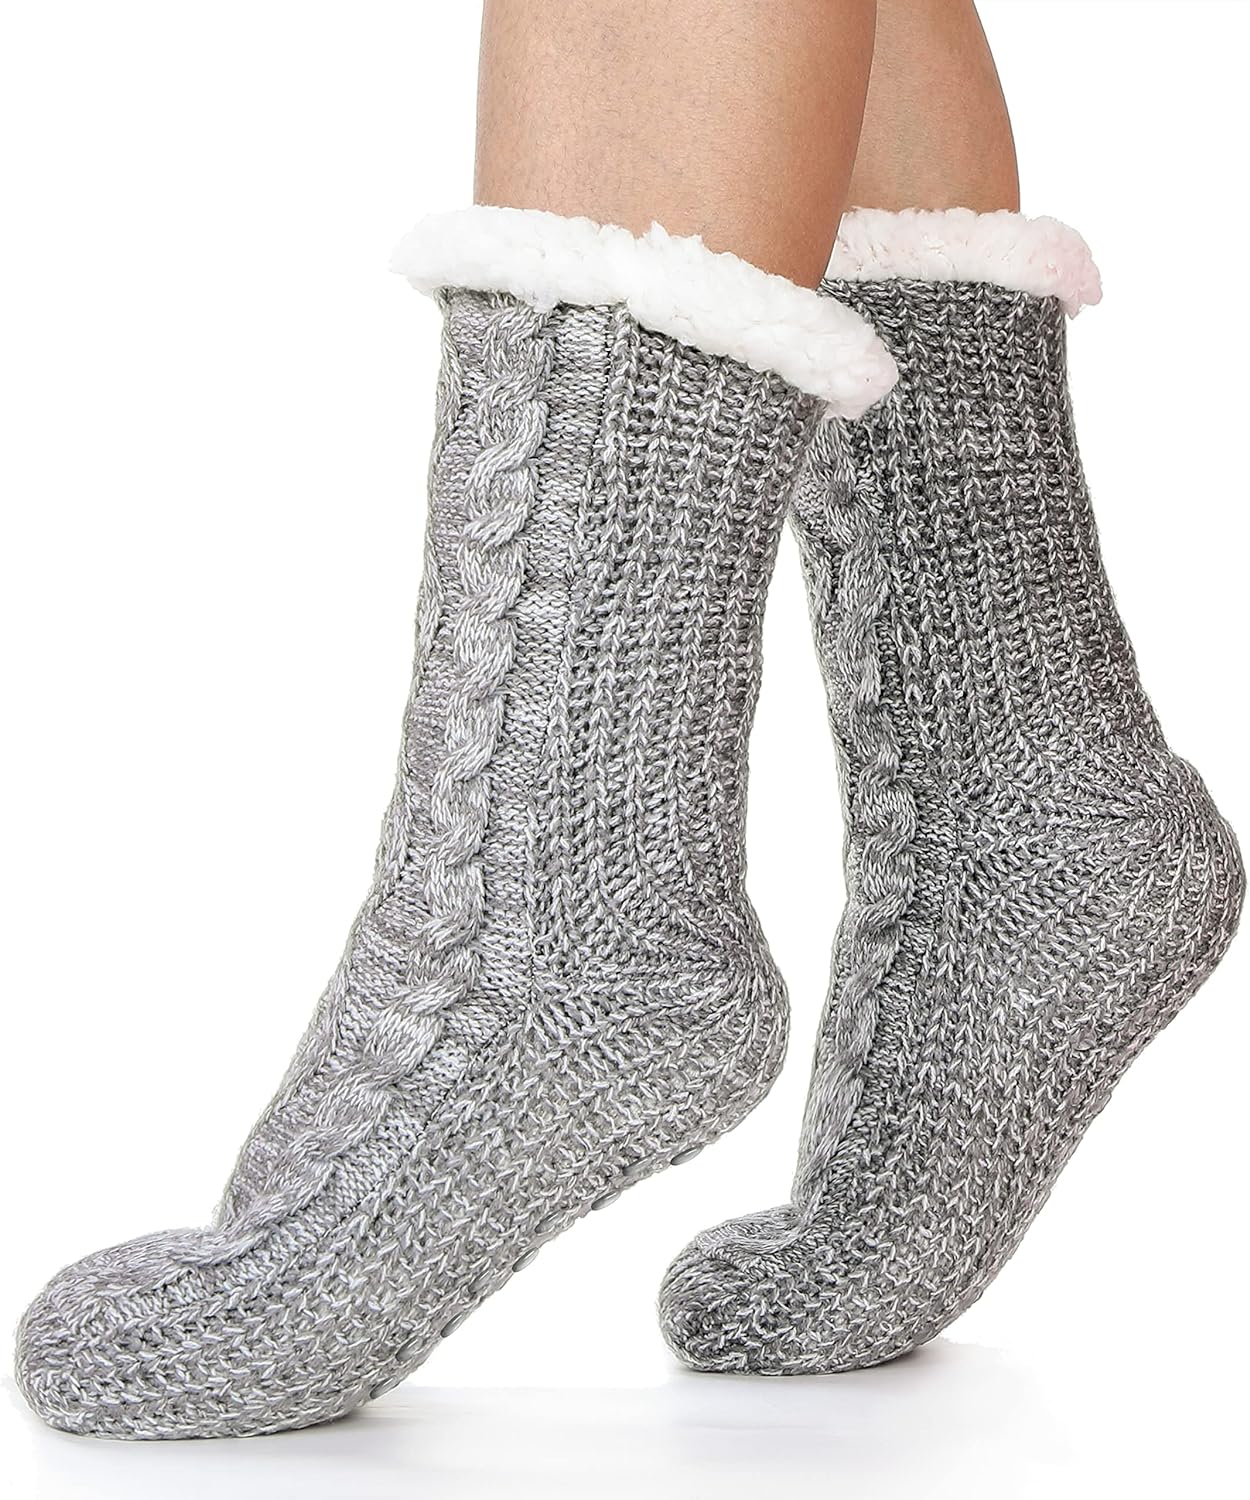 Women Fluffy Slipper Socks Winter Cosy Thermal Warm Thick Cabin Fleece Plush Grips Non Slip Bed Socks